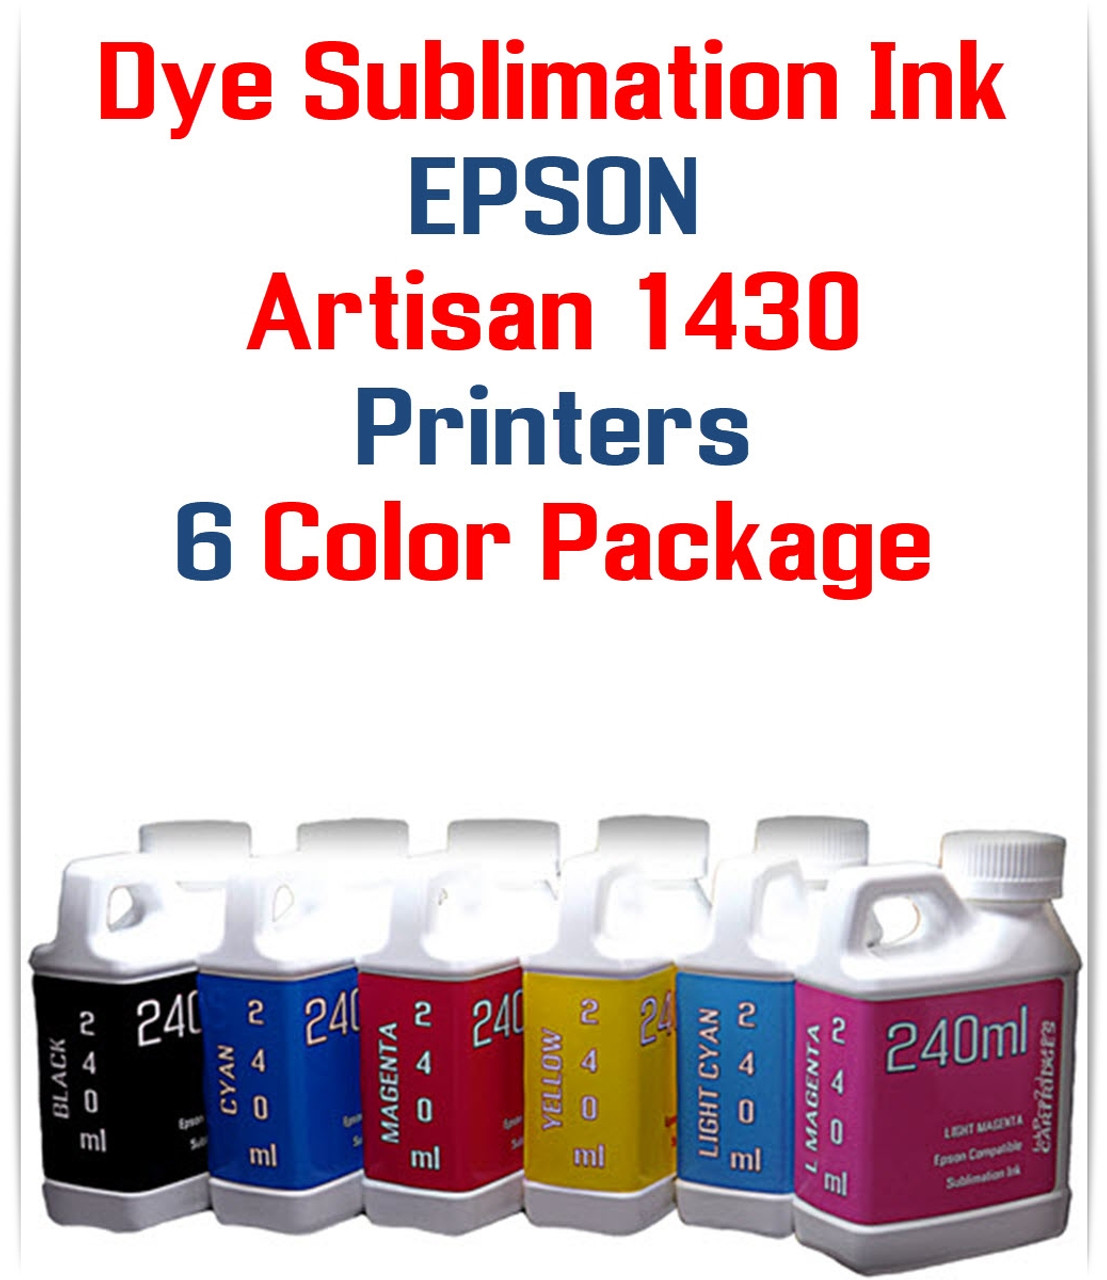 6- 240ml bottles Dye Sublimation Ink for Epson Artisan 1430 printer
Included colors: Black, Cyan, Magenta, Yellow, Light Cyan, Light Magenta